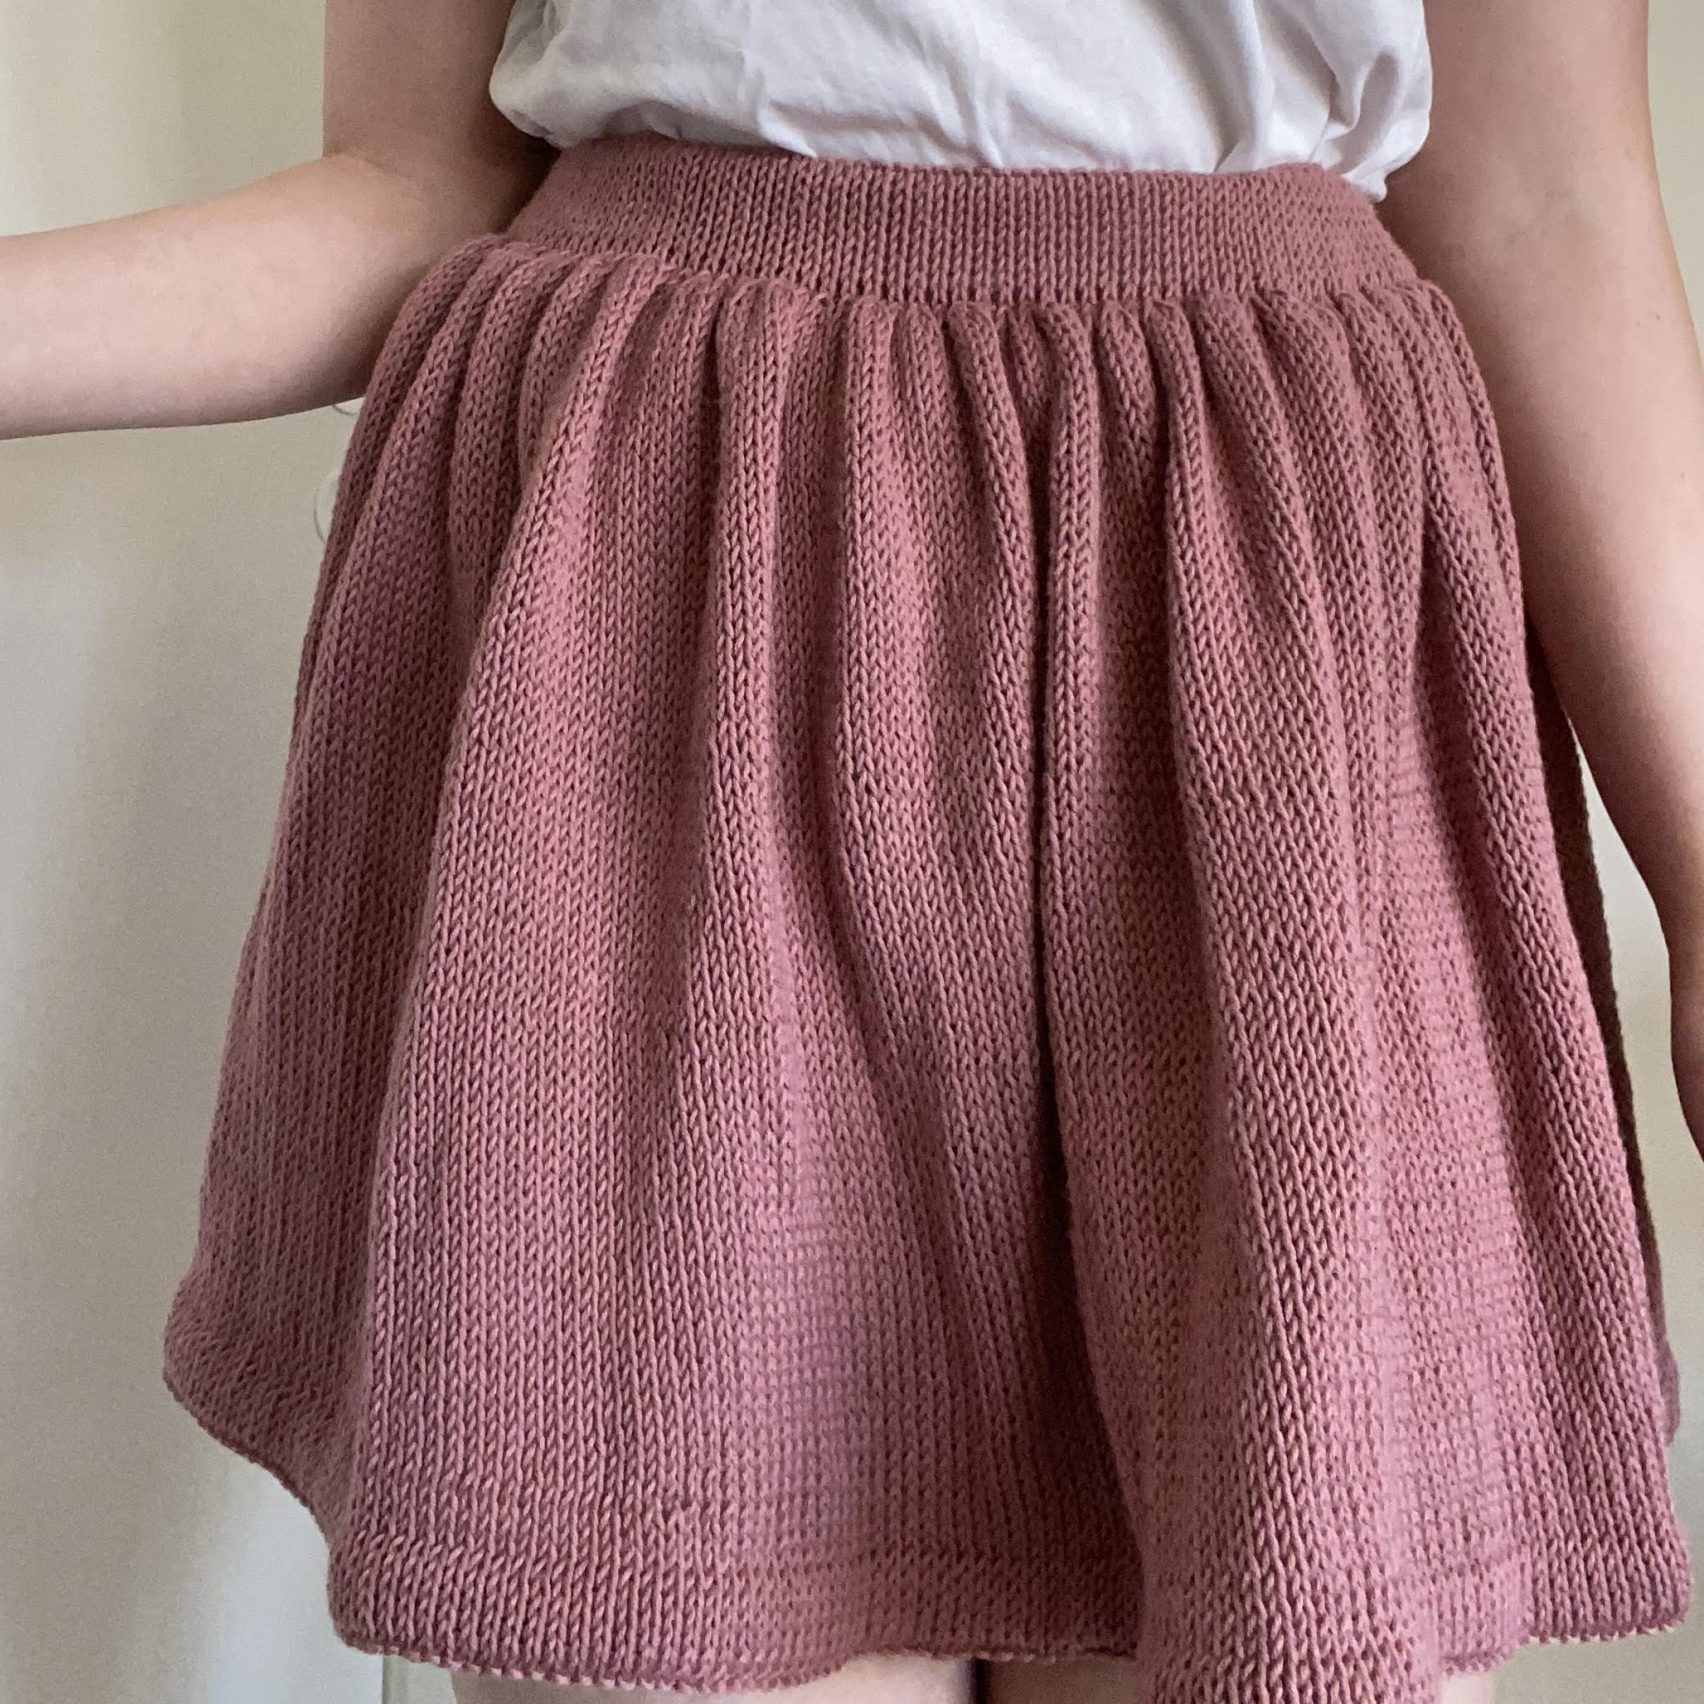  - Magda skirt | Cotton skirt knitting kit- by HipKnitShop - 19/03/2021